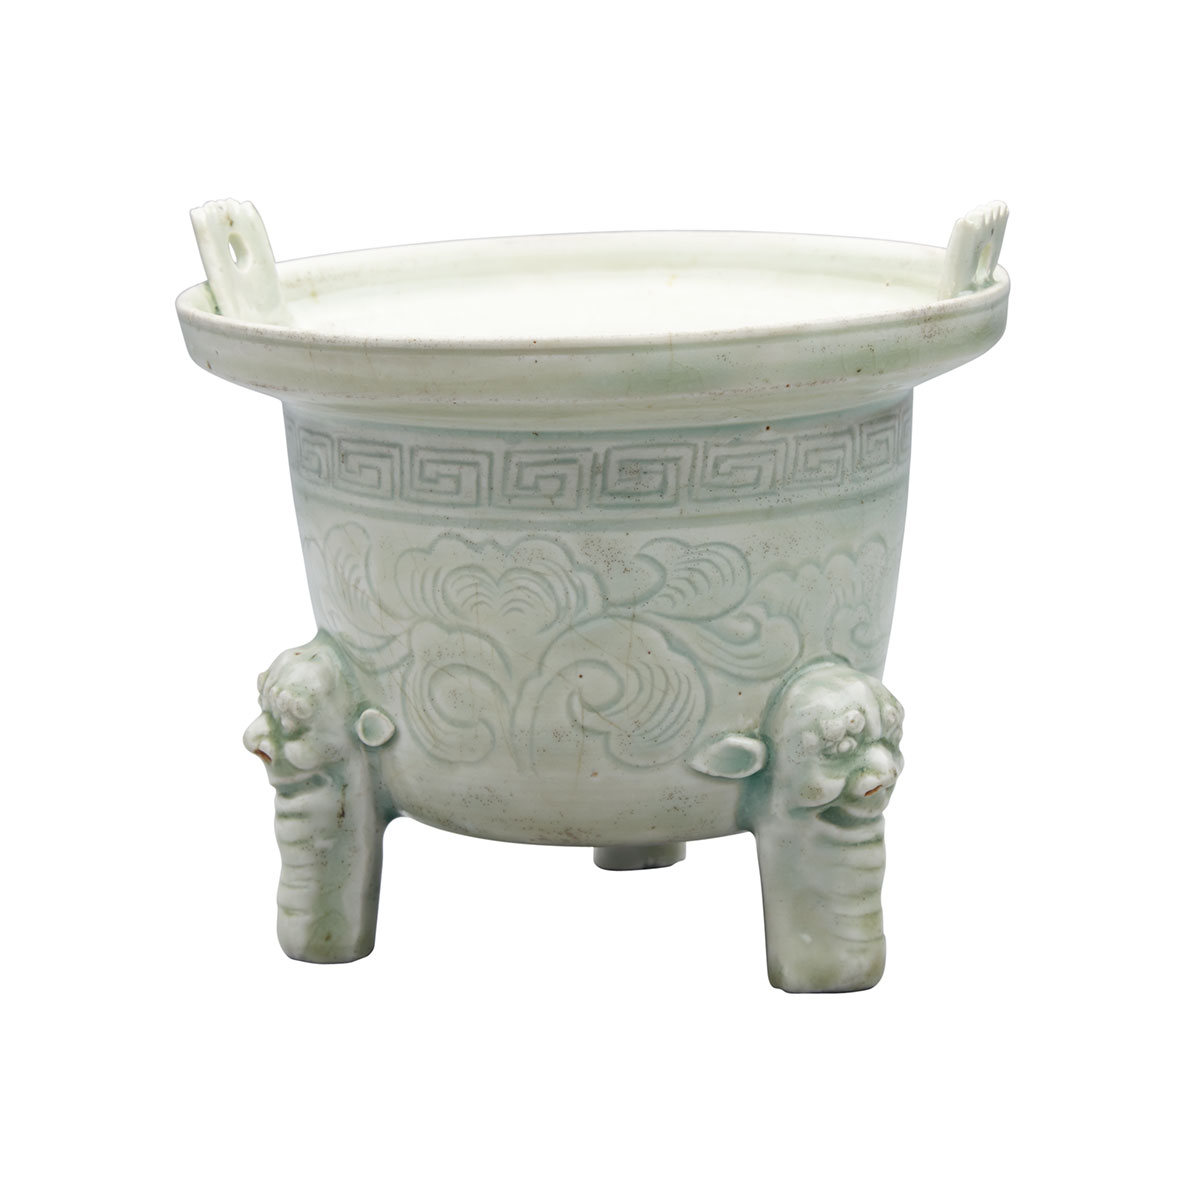 Qingbai ‘Peony’ Tripod Censer, Yuan Dynasty